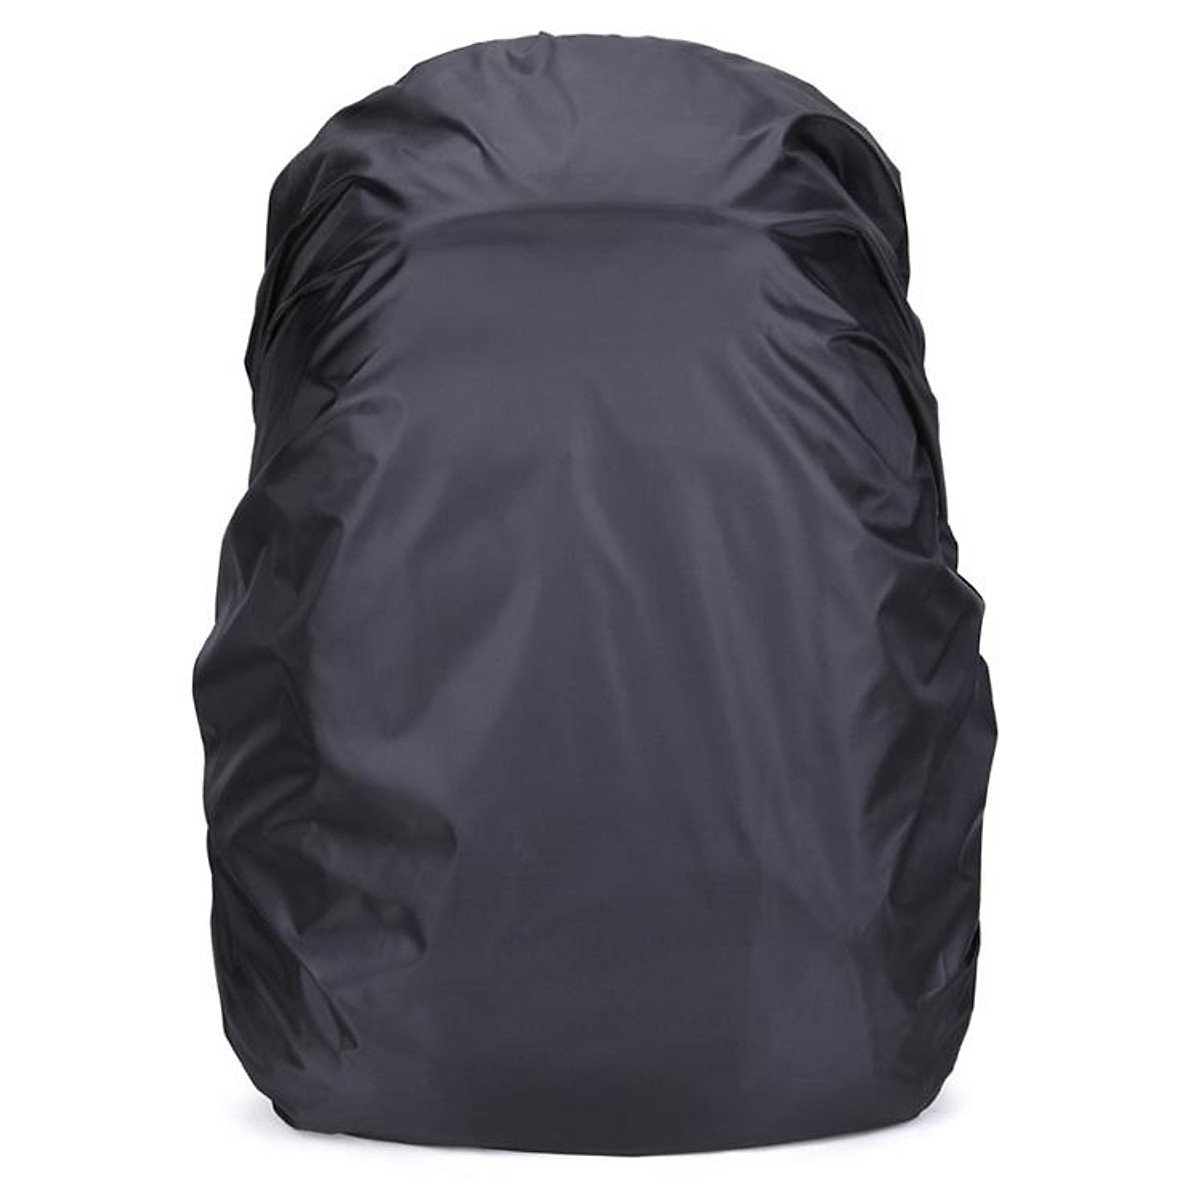 Waterproof Outdoor Portable Bags Cover Camping Hiking Waterproof Backpack  Army Rucksack Bag Rain Cover